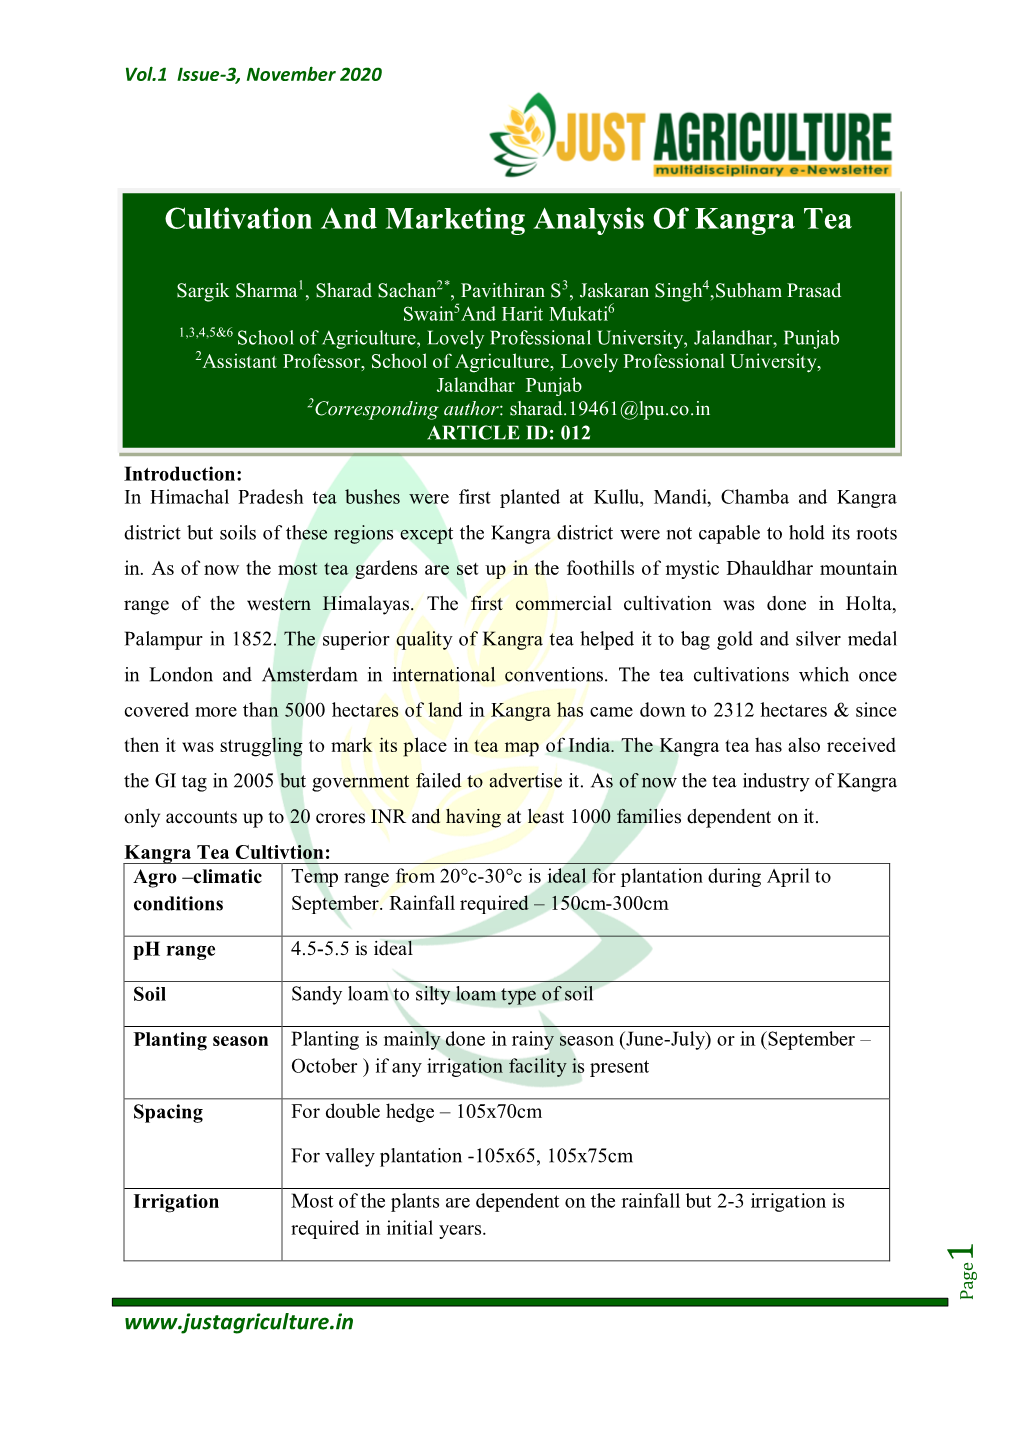 Cultivation and Marketing Analysis of Kangra Tea